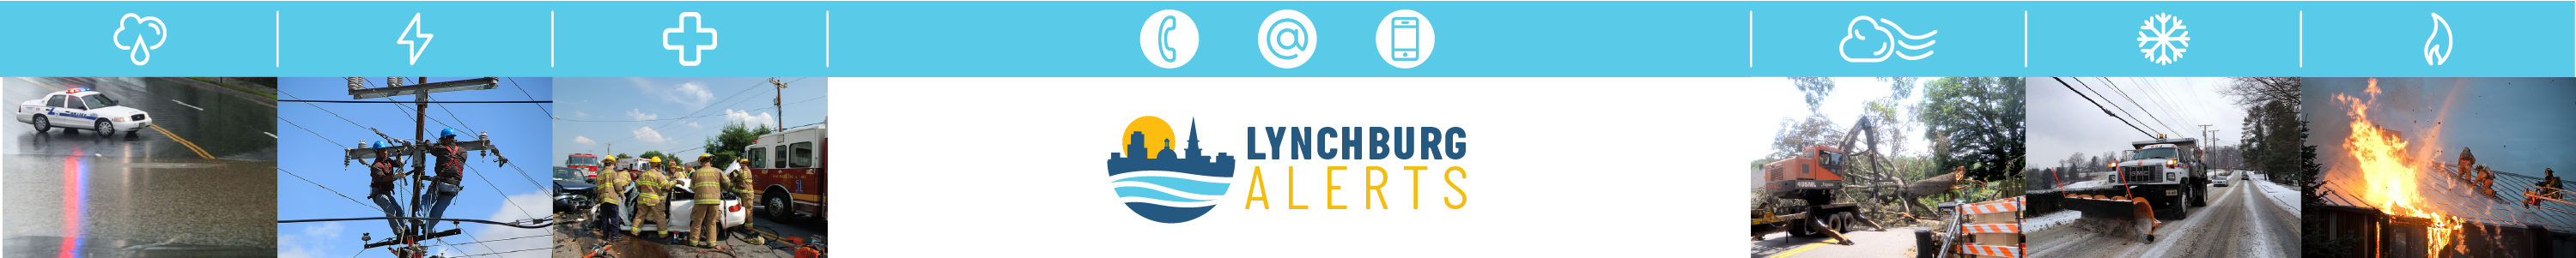 [City of Lynchburg] Member Portal banner